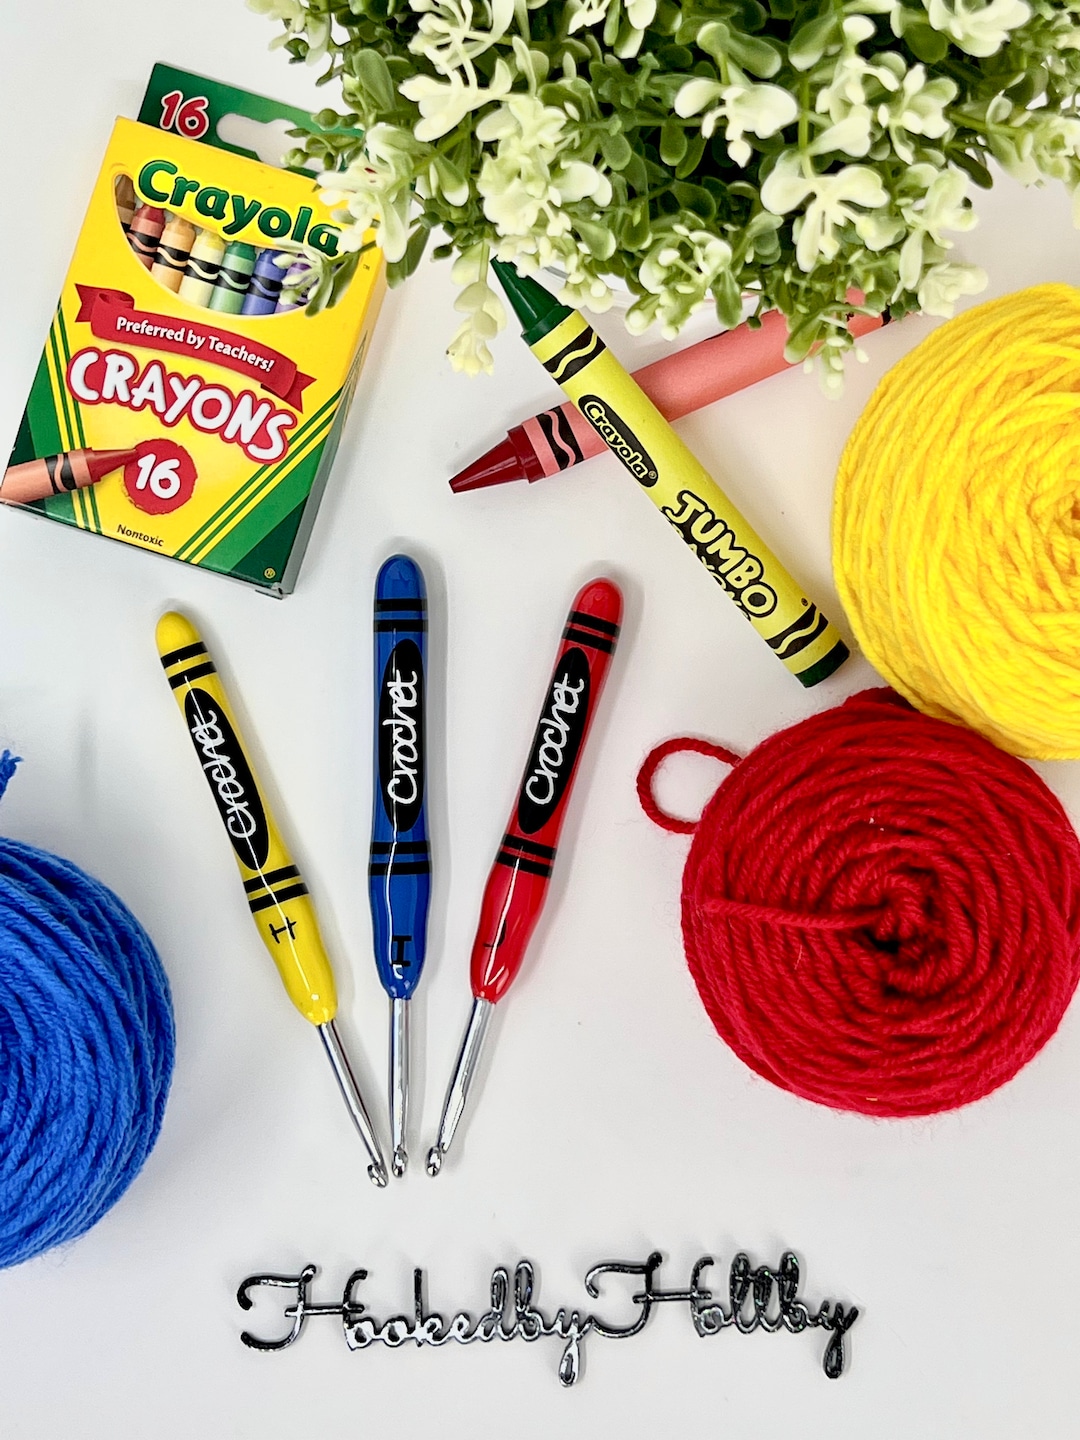 Crayon Crochet Hooks, Ergonomic Crochet Hooks, Hooked by Holtby Crochet  Hooks, Crochet Hooks, Inline Crochet Hooks, Bates Crochet Hooks -  UK